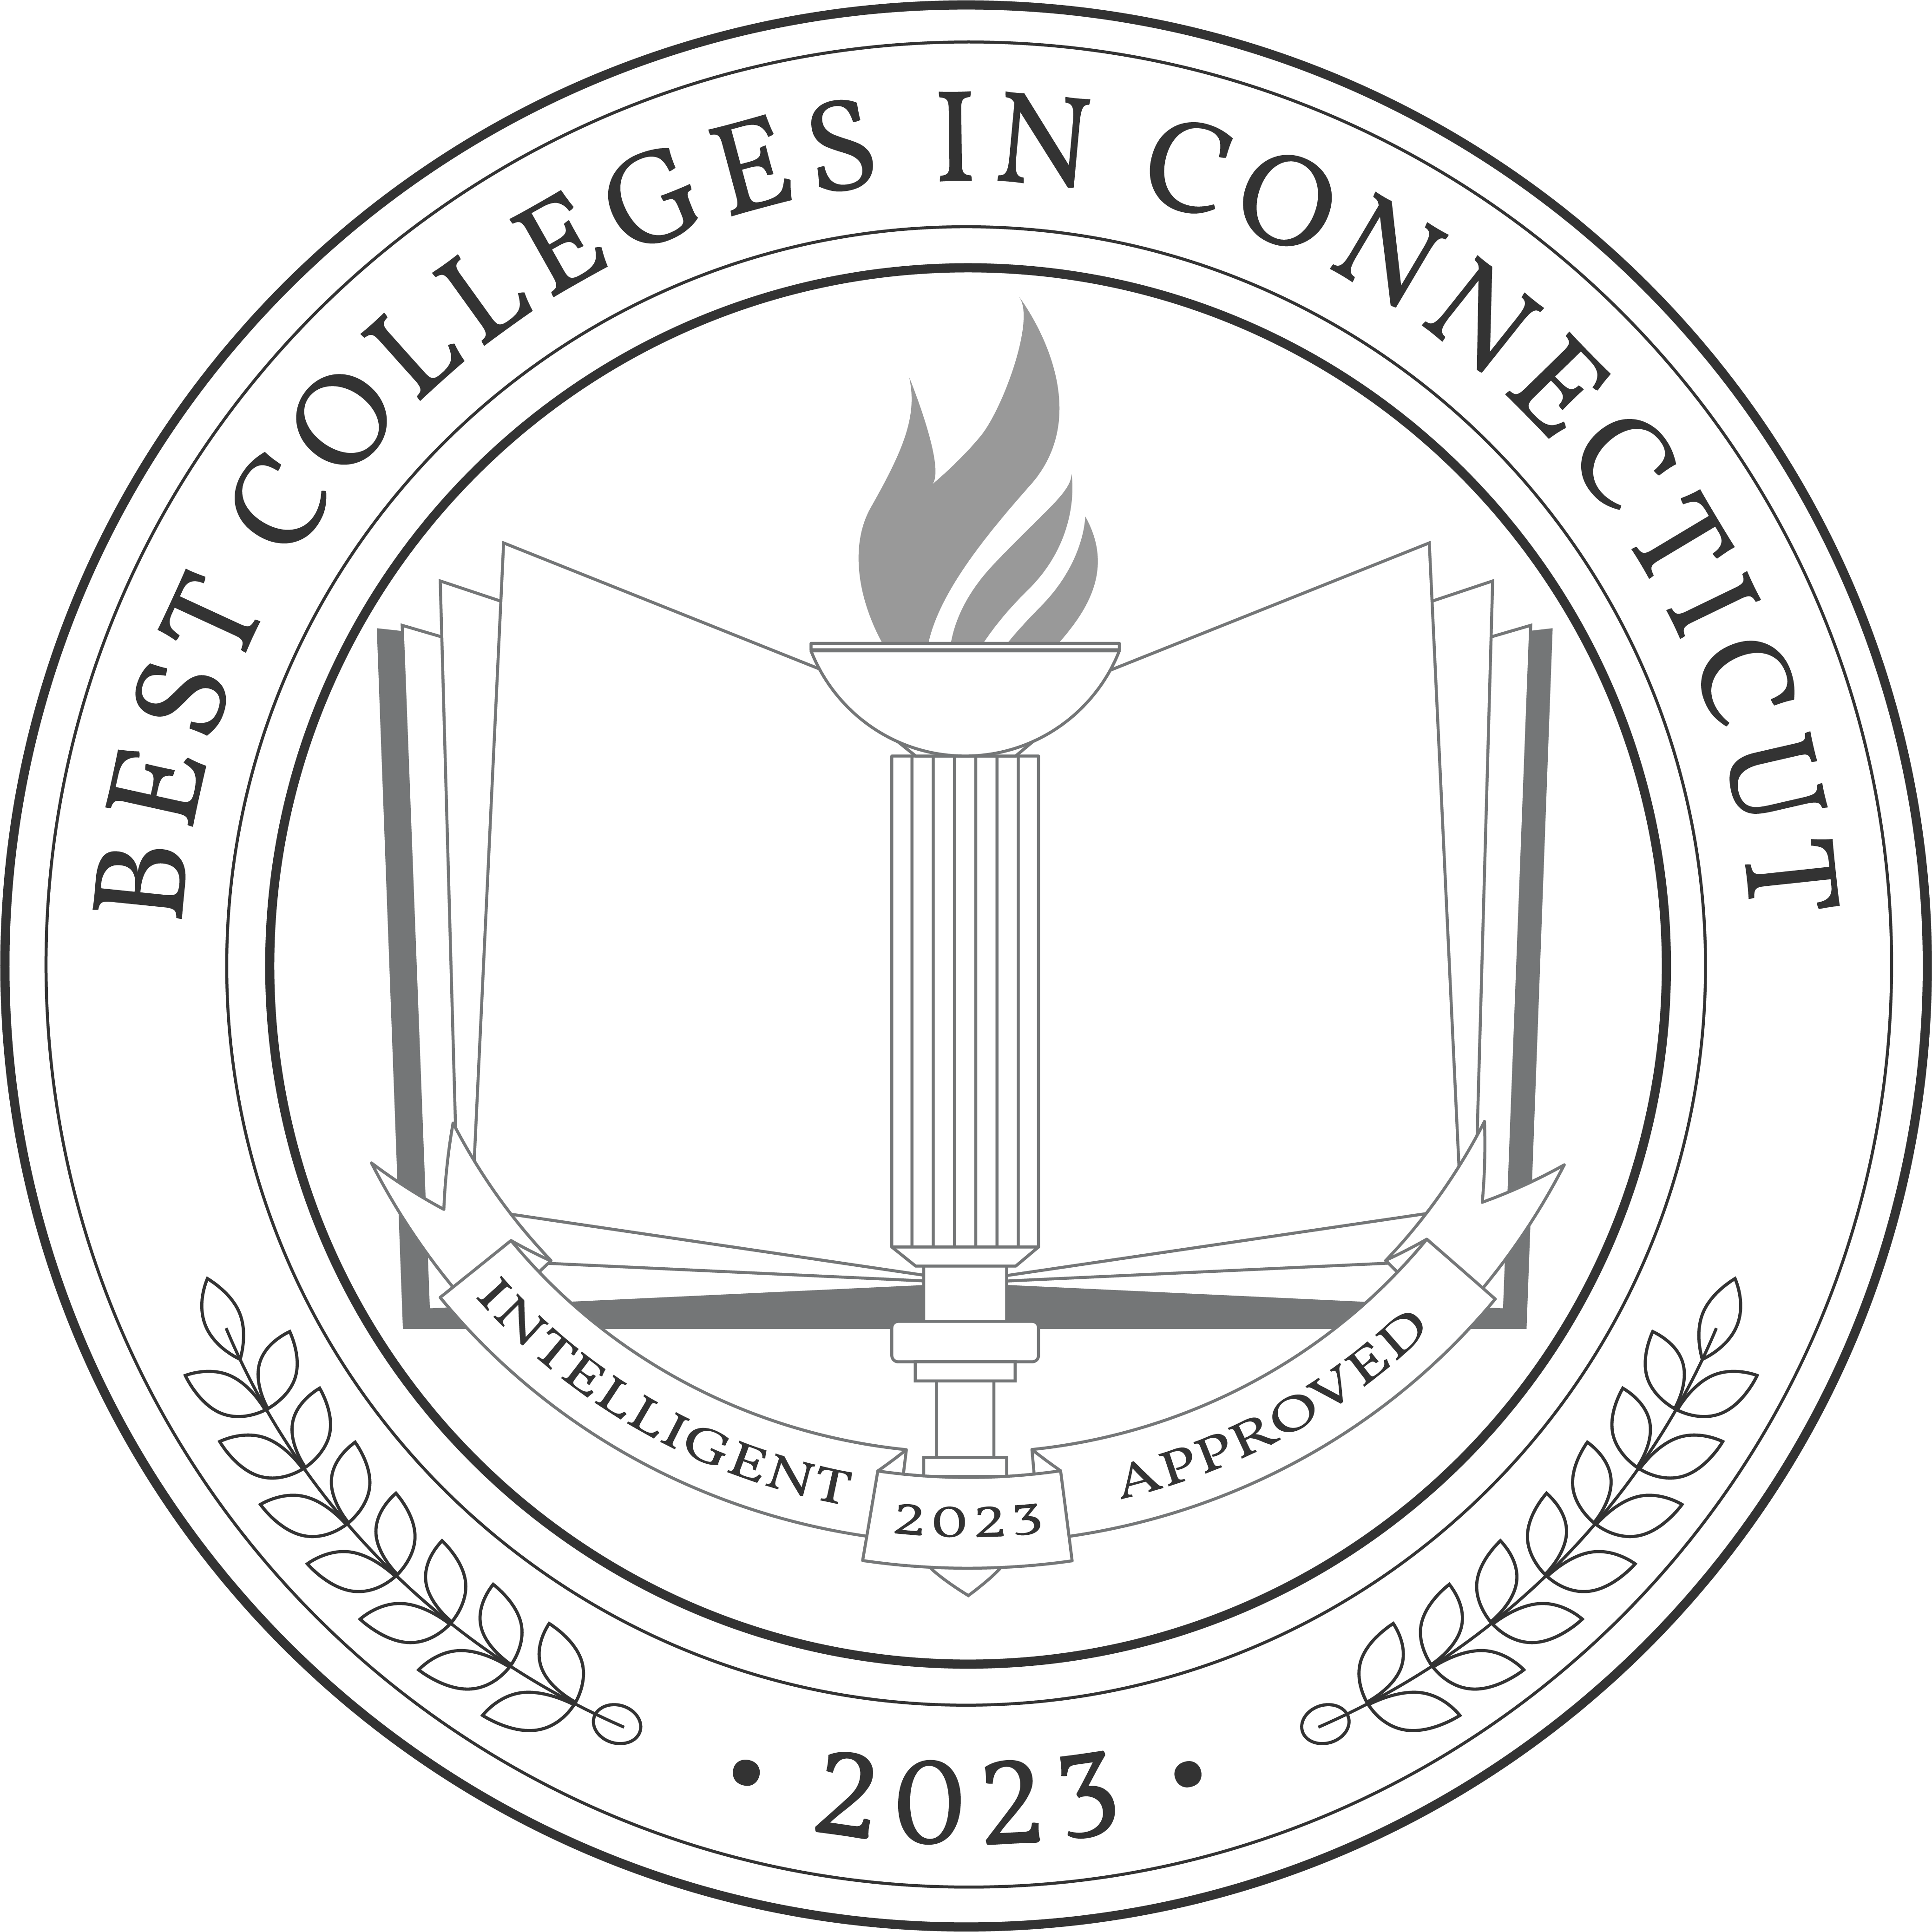 Best Colleges in Connecticut 2023 Badge